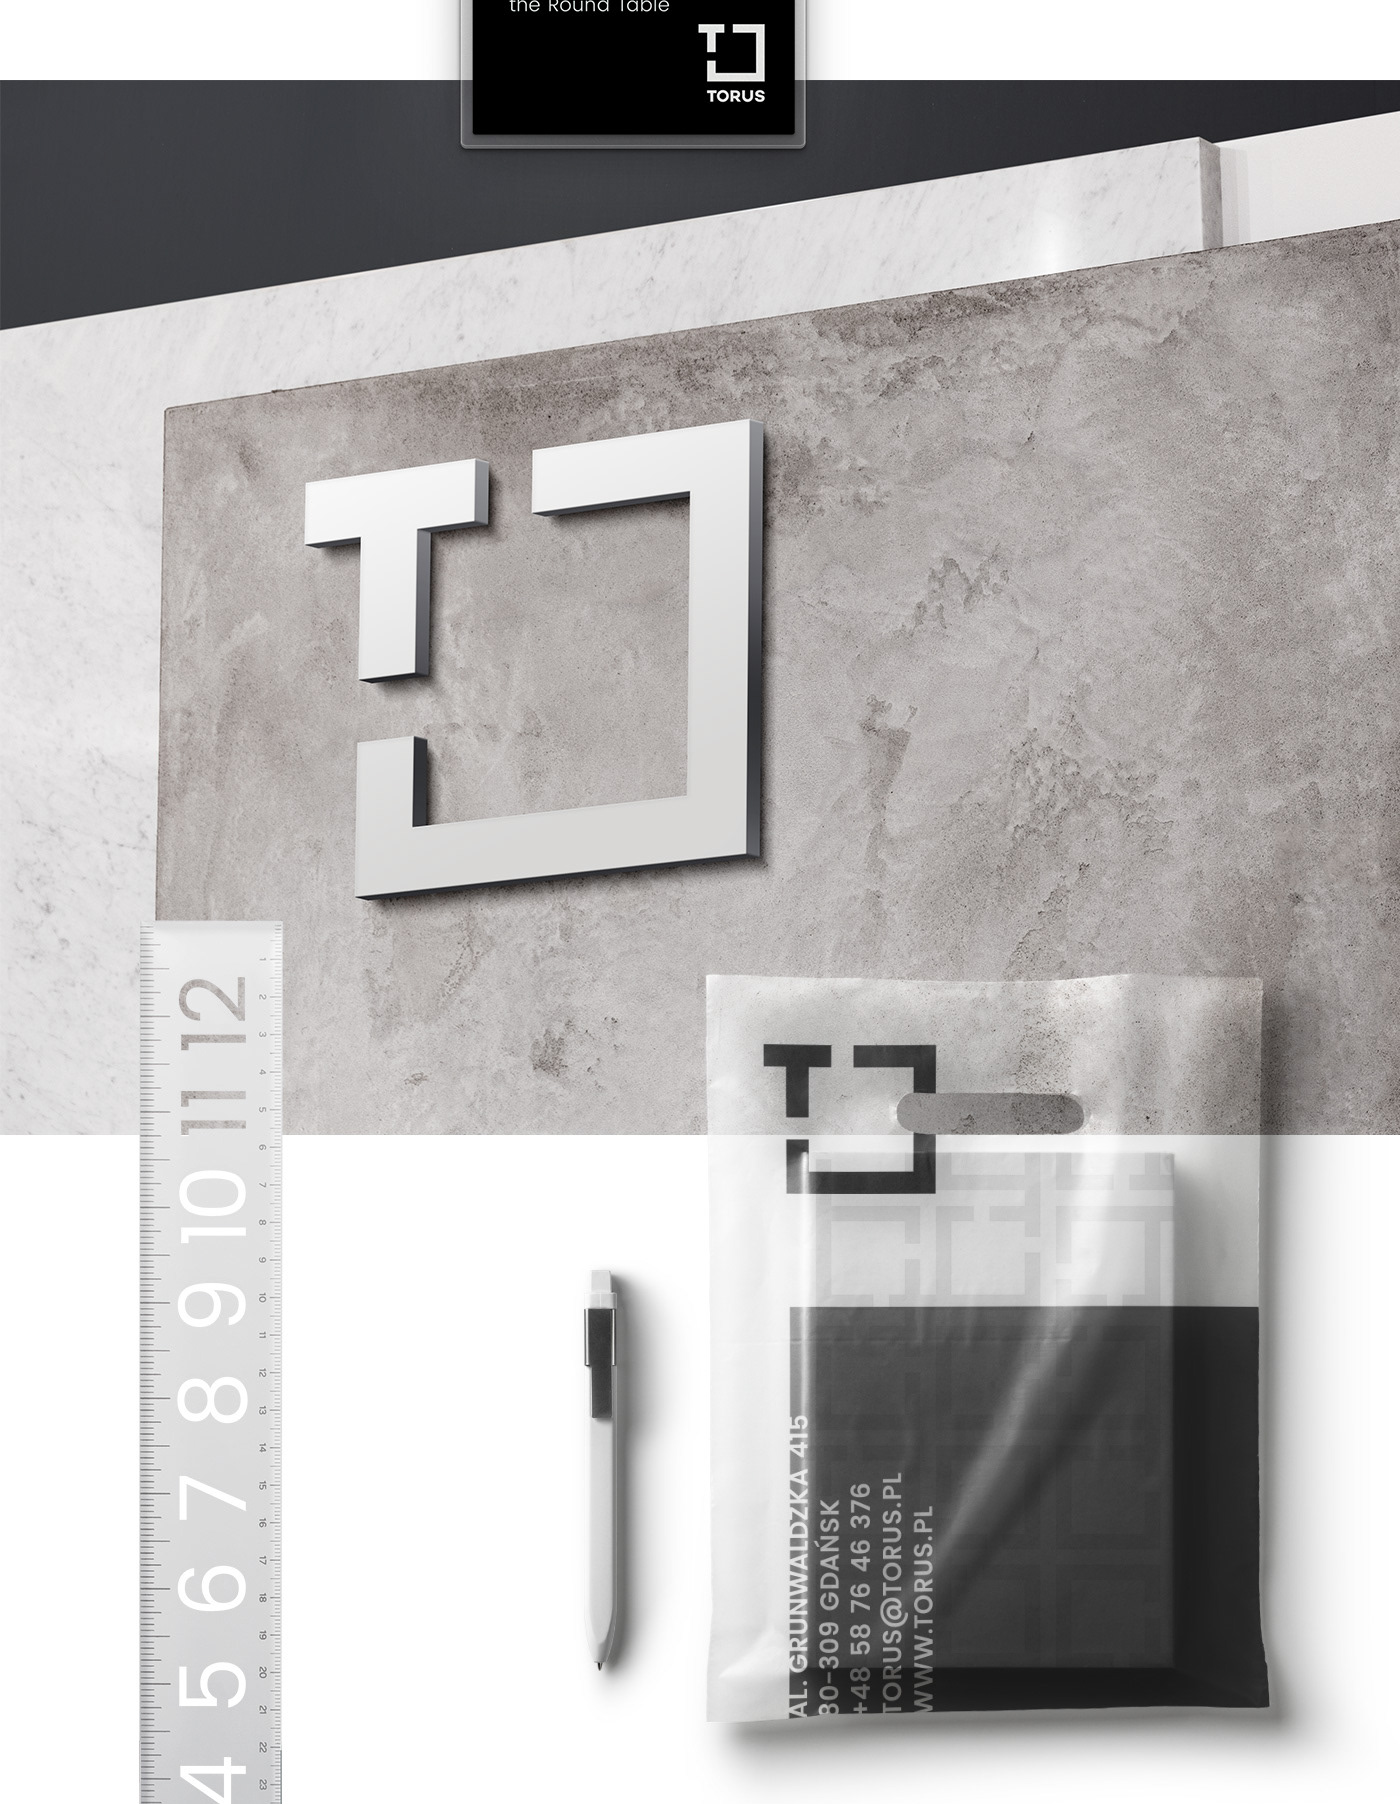 #ID #rebranding #Branding #Logo #black #white #architecture #torus #tofu #tofustudio